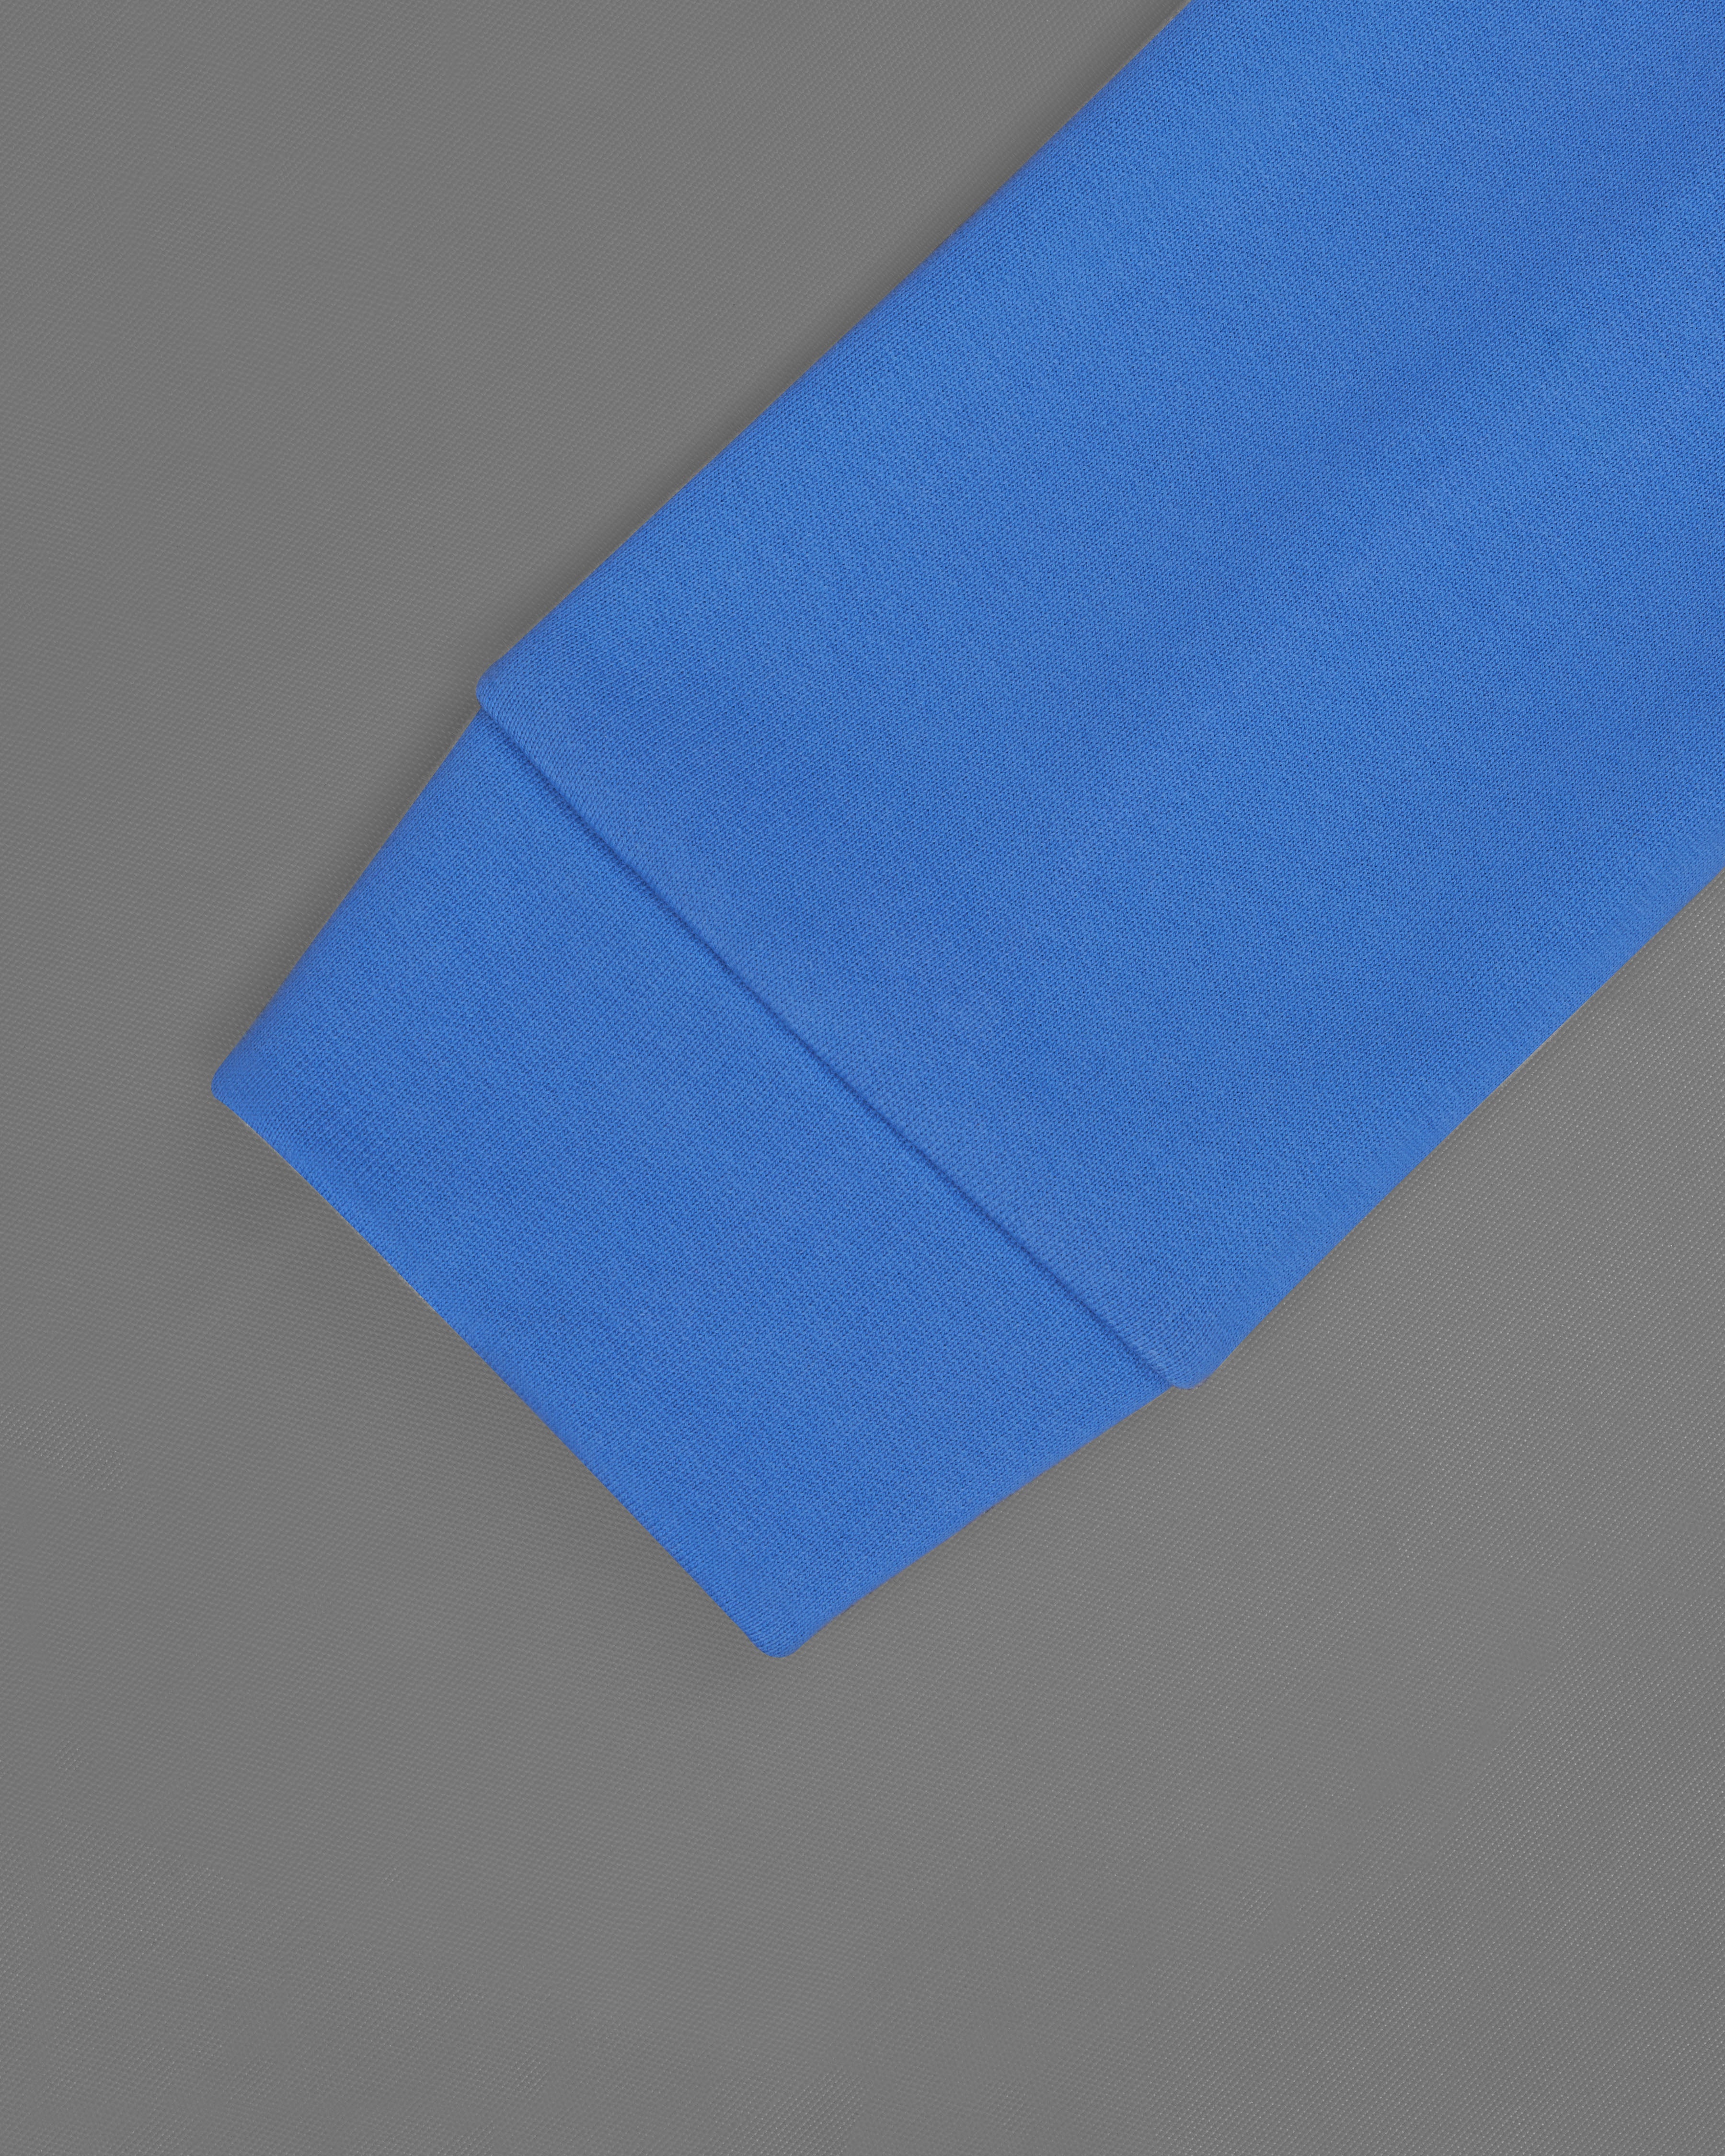 Blue With Cream Half and Half Full Sleeve Premium Cotton Heavyweight Hooded Sweatshirt TS642-B, TS642-M, TS642-A, TS642-XL, TS642-XXL, TS642-3XL, TS642-4XL